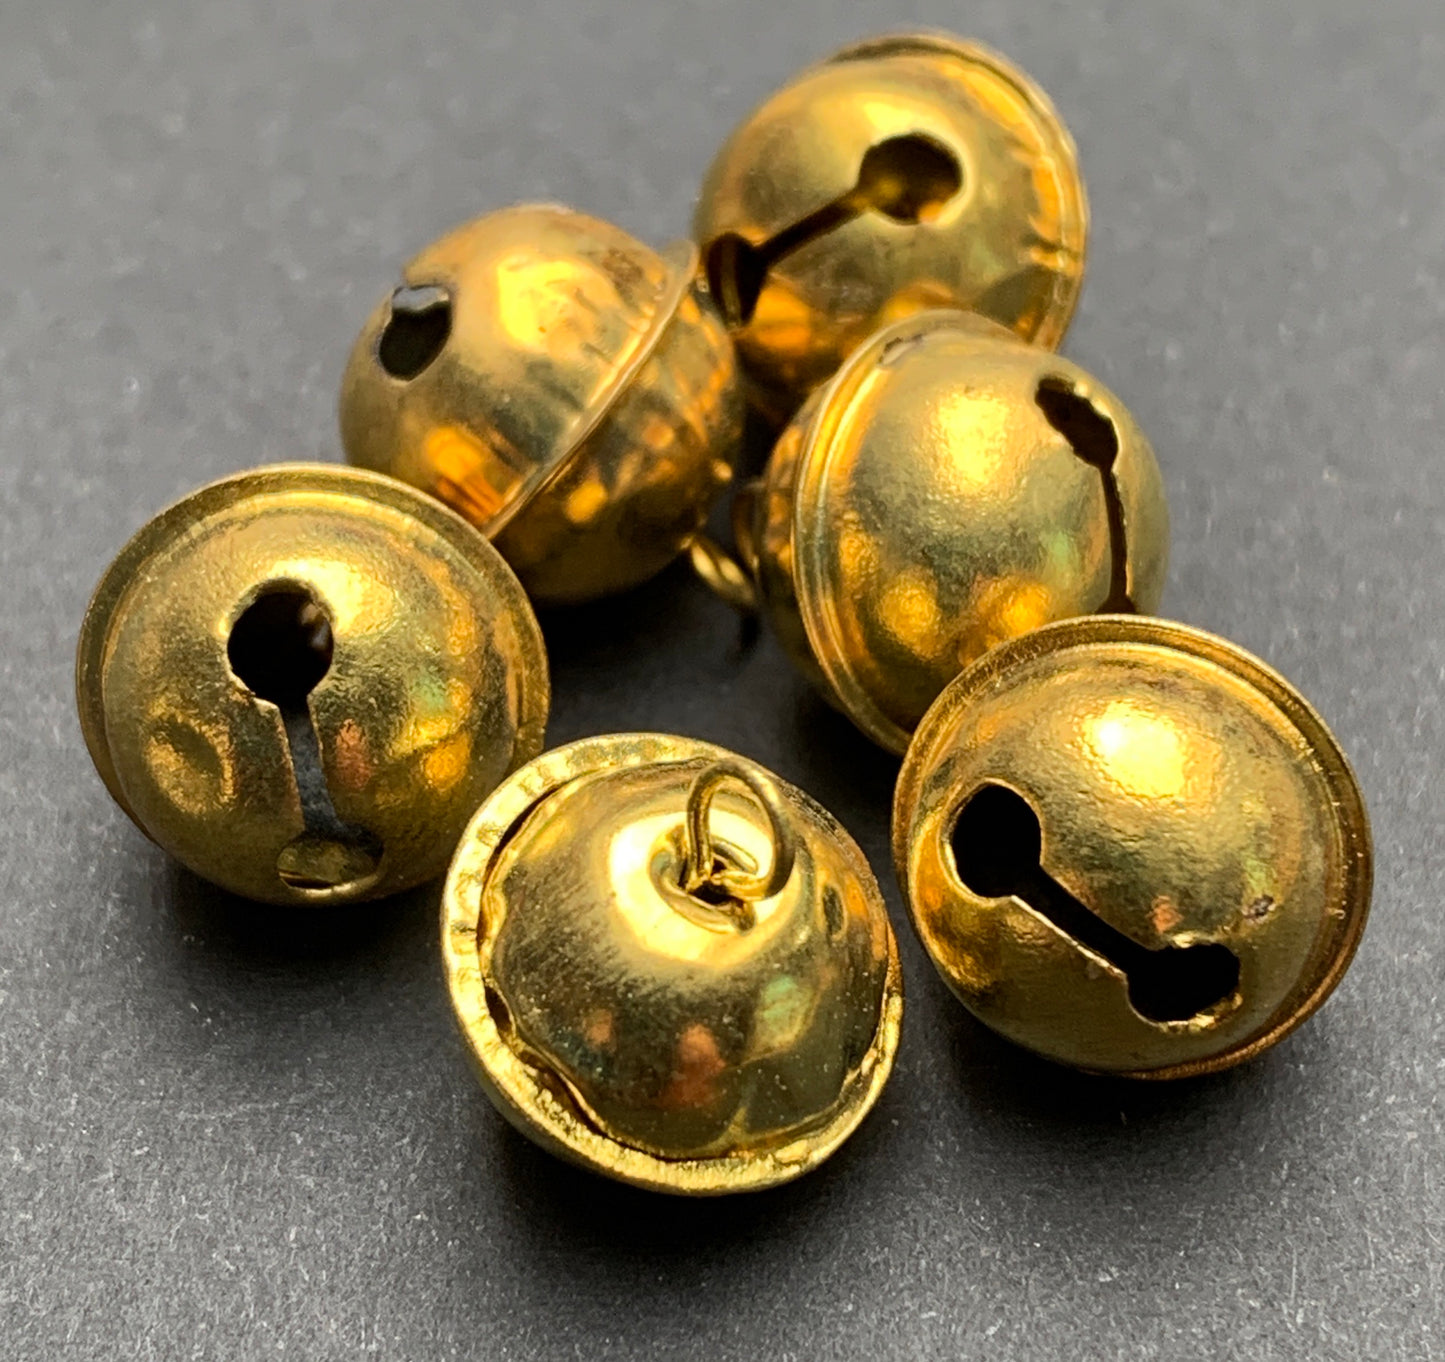 6 Little 1cm Vintage Brass Bells